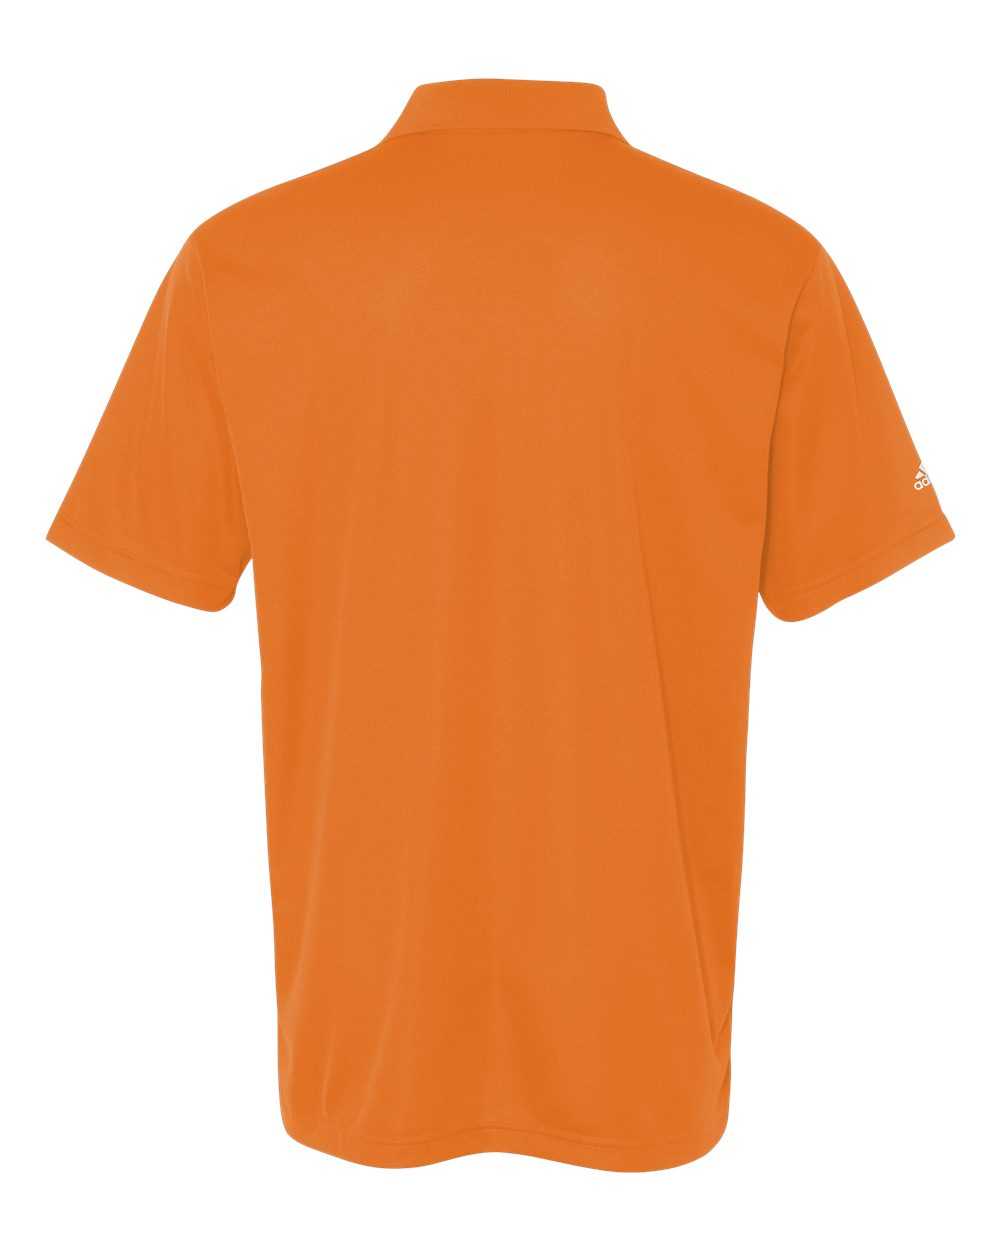 Adidas A130 Basic Sport Shirt - Bright Orange White - HIT a Double